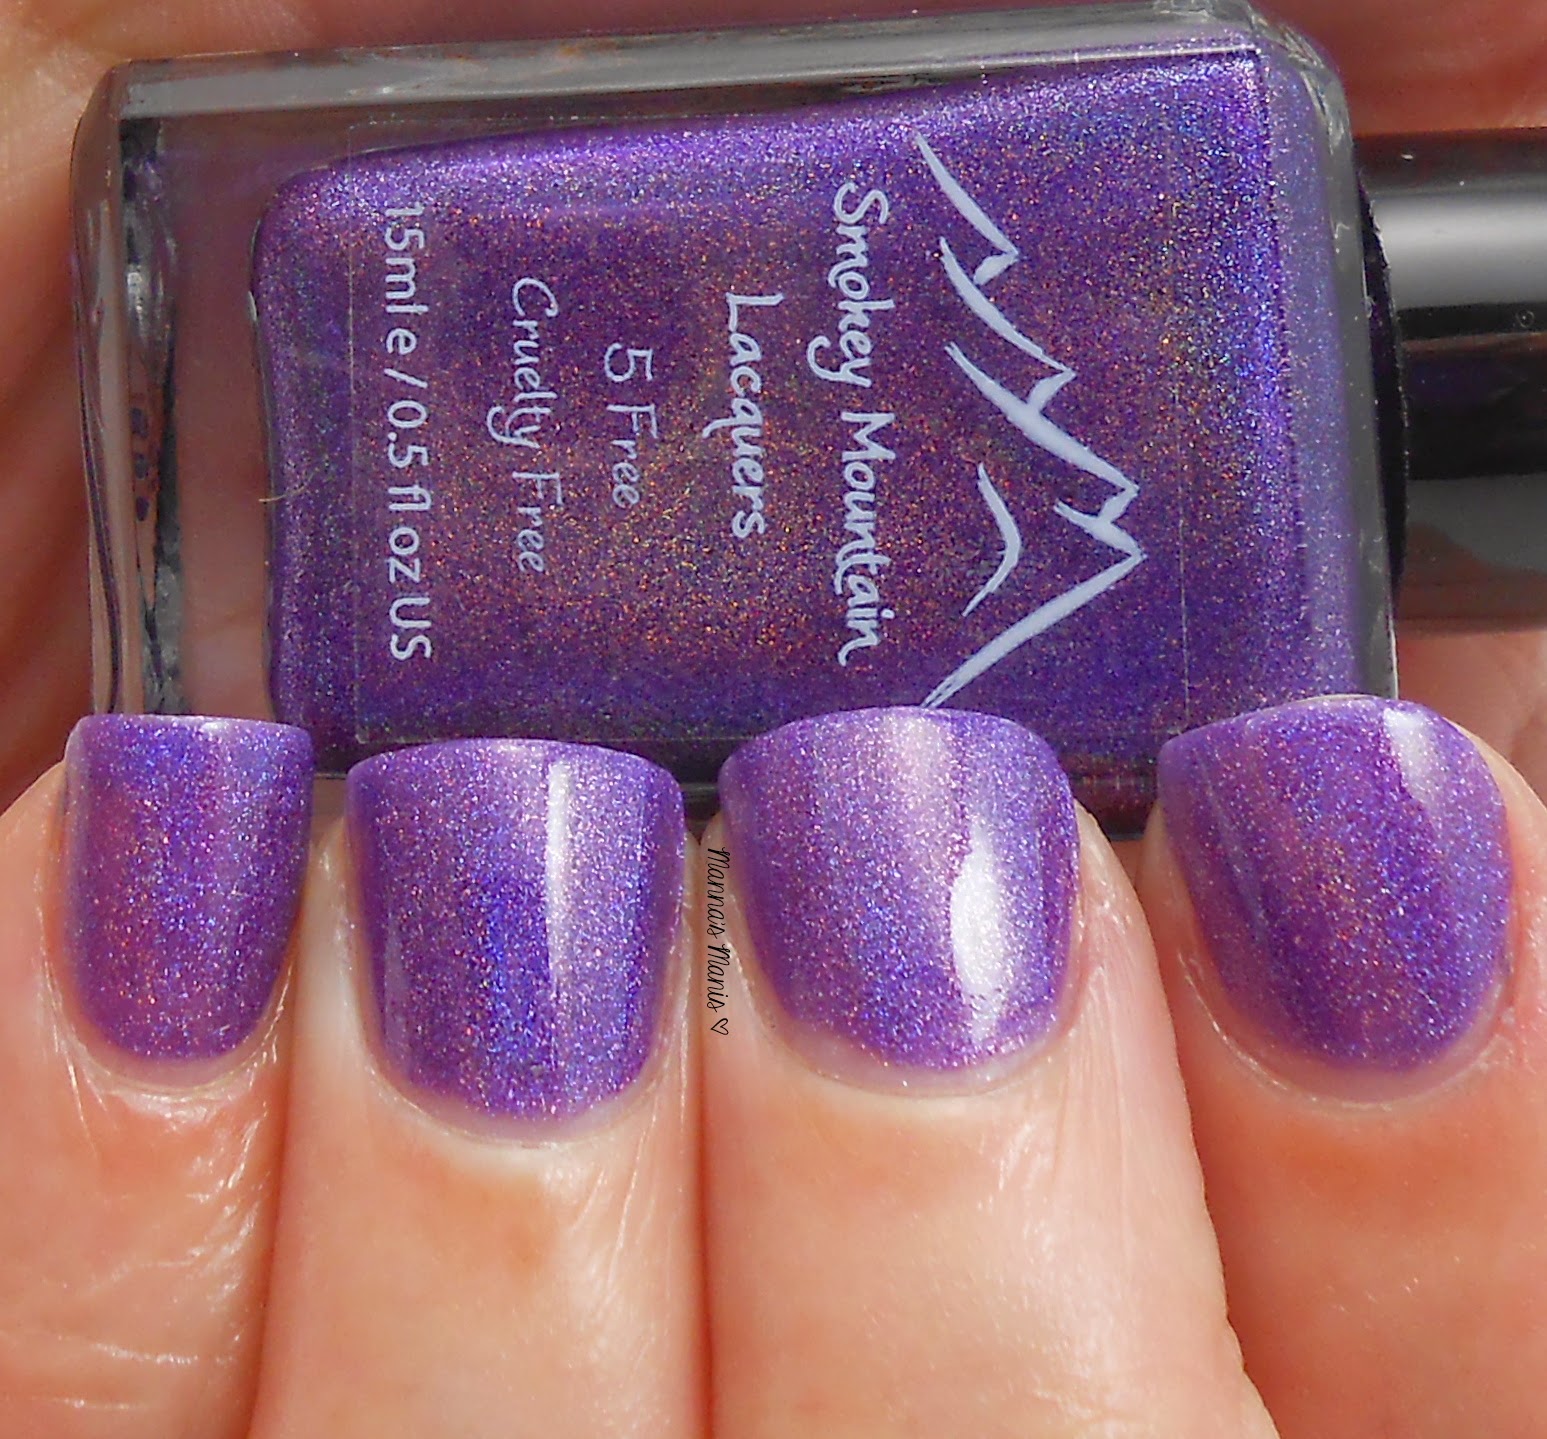 smokey mountain lacquers plumtastic, a purple holographic nail polish